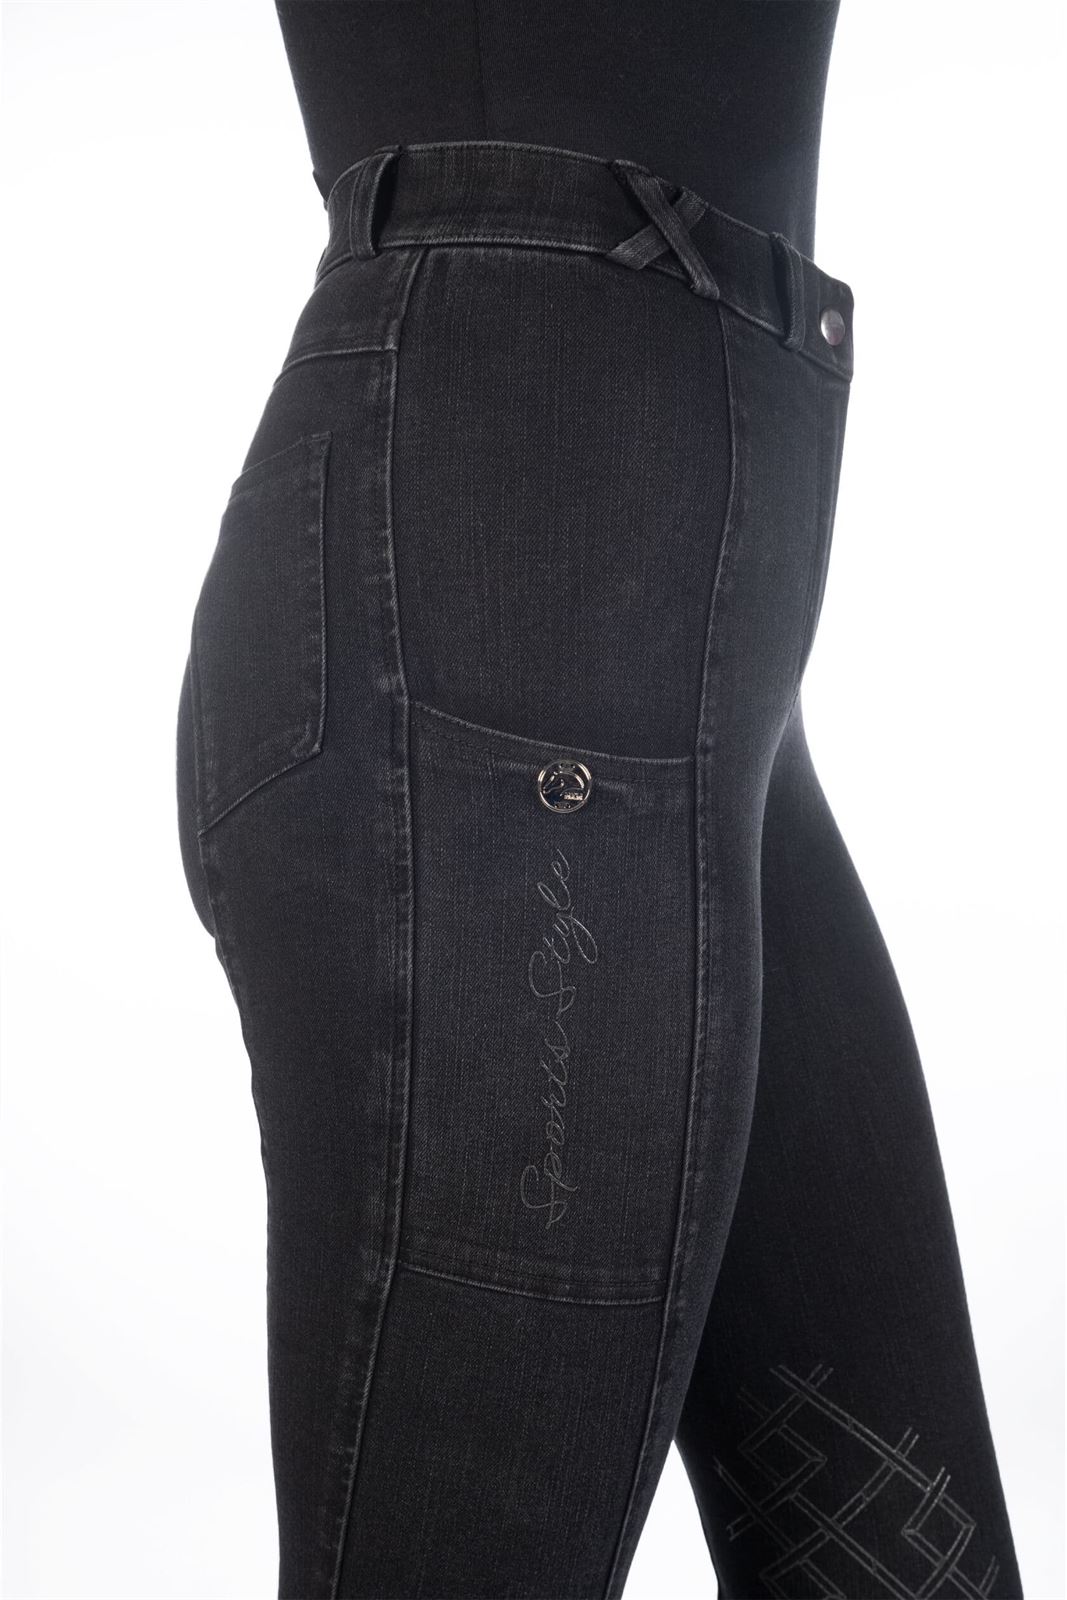 Pantalón mujer HKM Sports Equipment DENIM (vaquero) color negro rodilla grip - Imagen 6